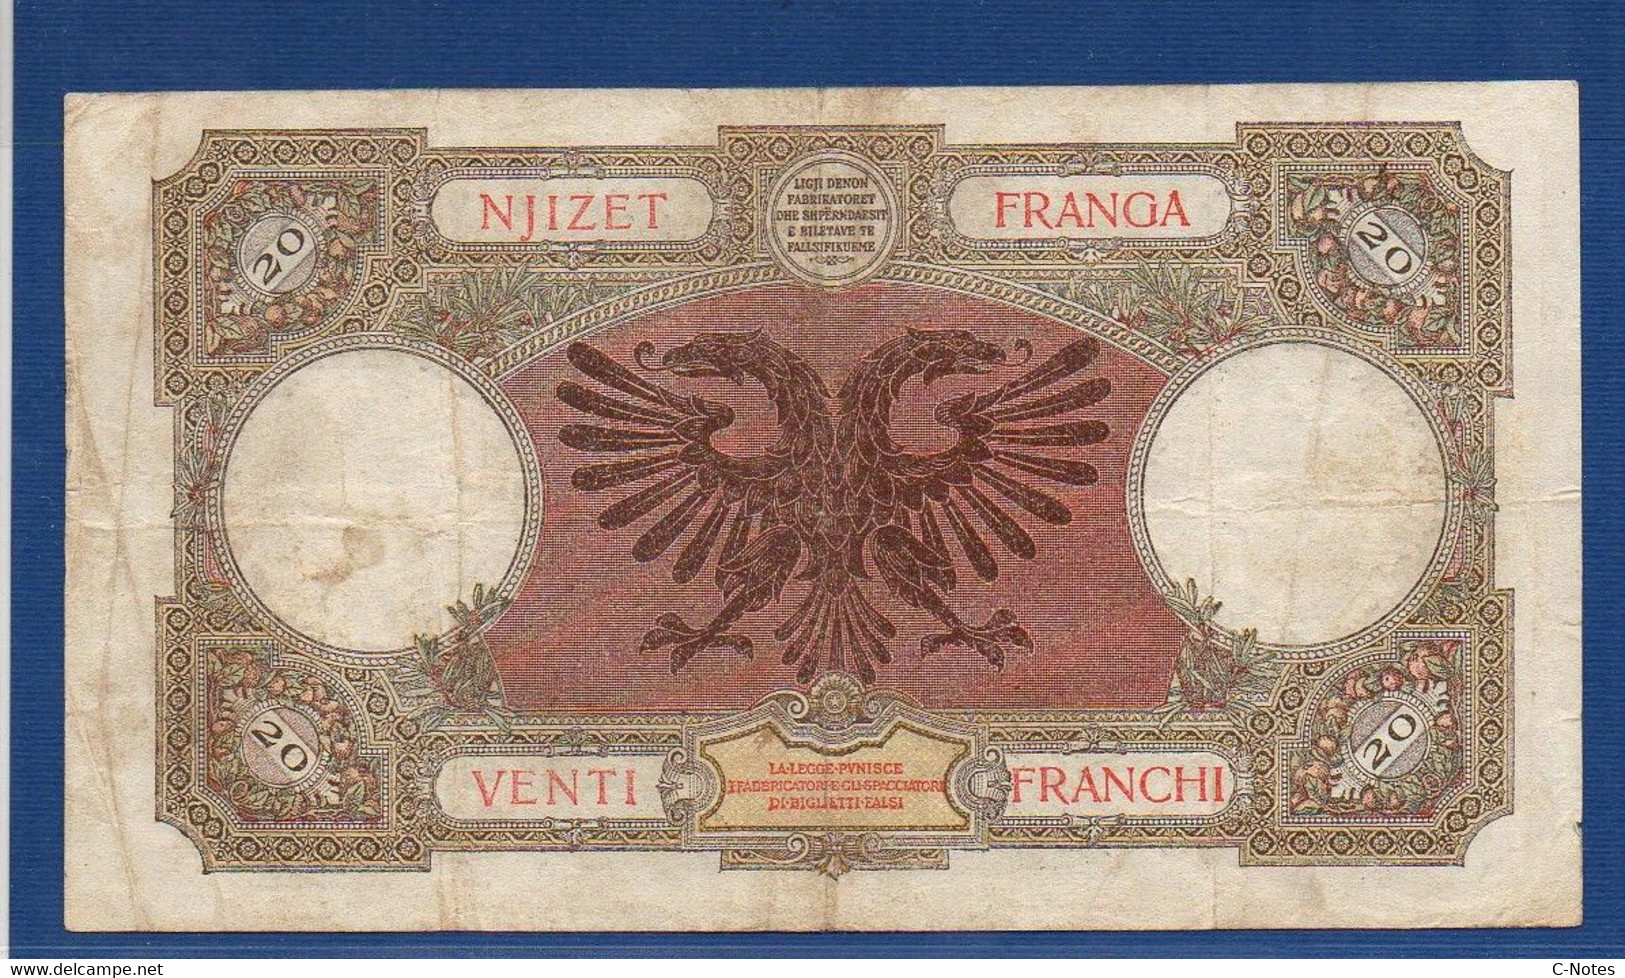 ALBANIA - Banca Nazionale D'Albania - P.7 – 20 Franga 1939 -  F+, Serie L20 5260 - Albania